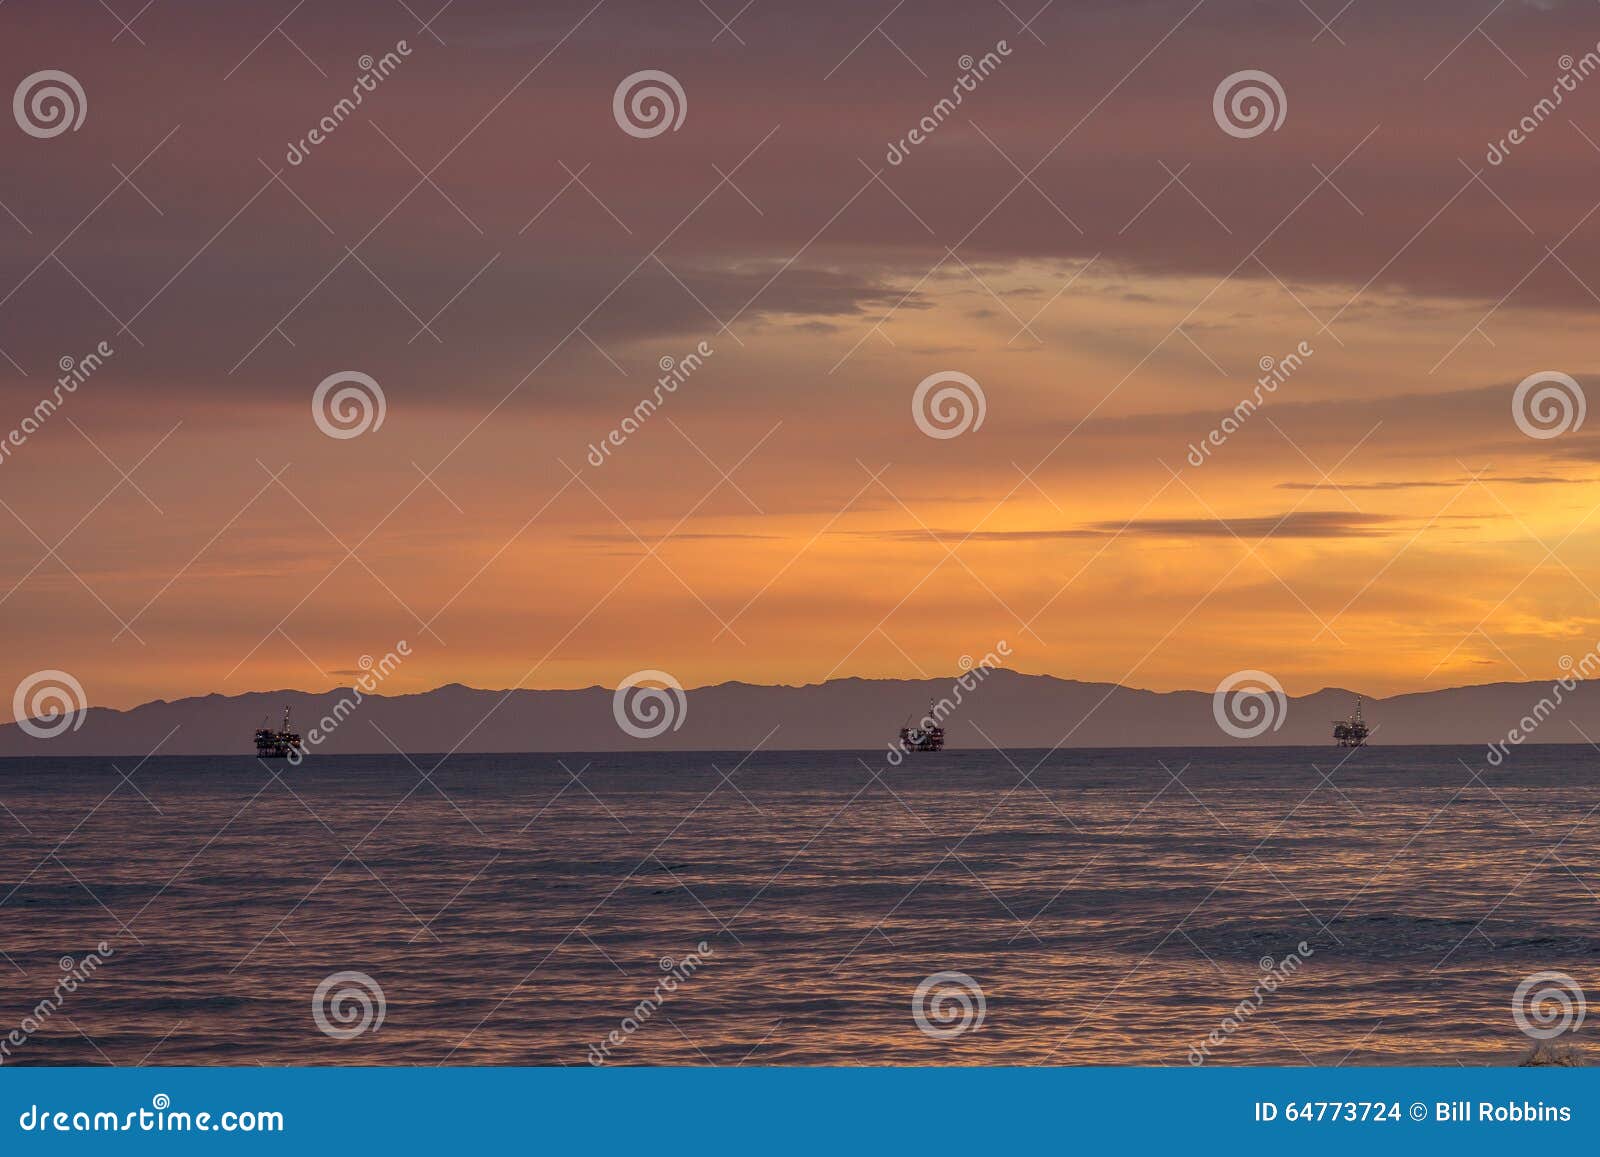 oil platforms at sea